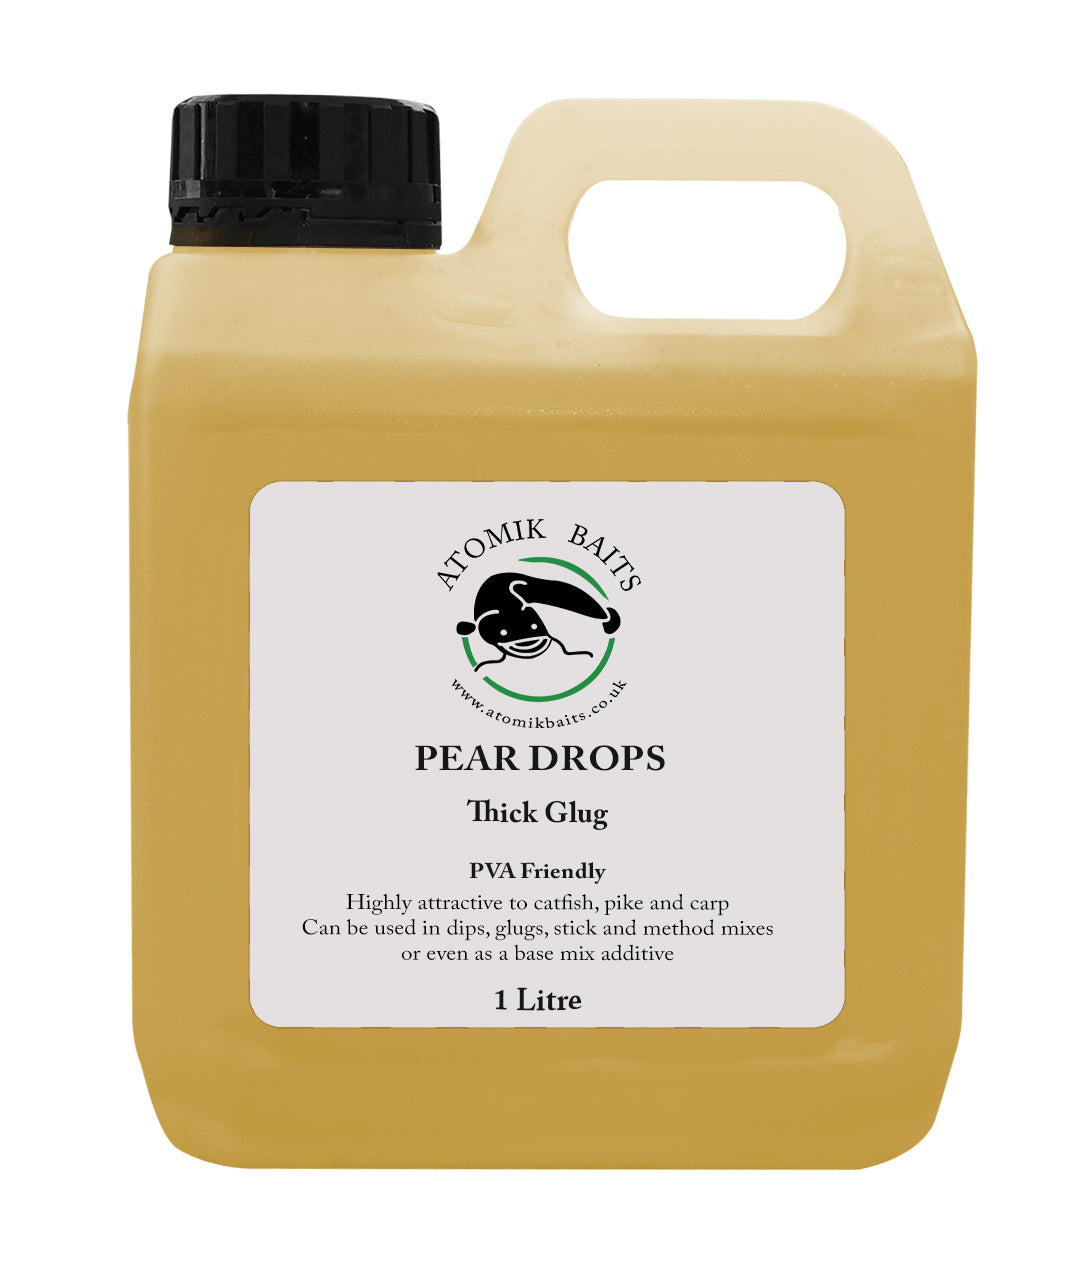 Pear Drops - Glug, Particle Feed, Liquid Additive, Dip -1 Litre 1000ml